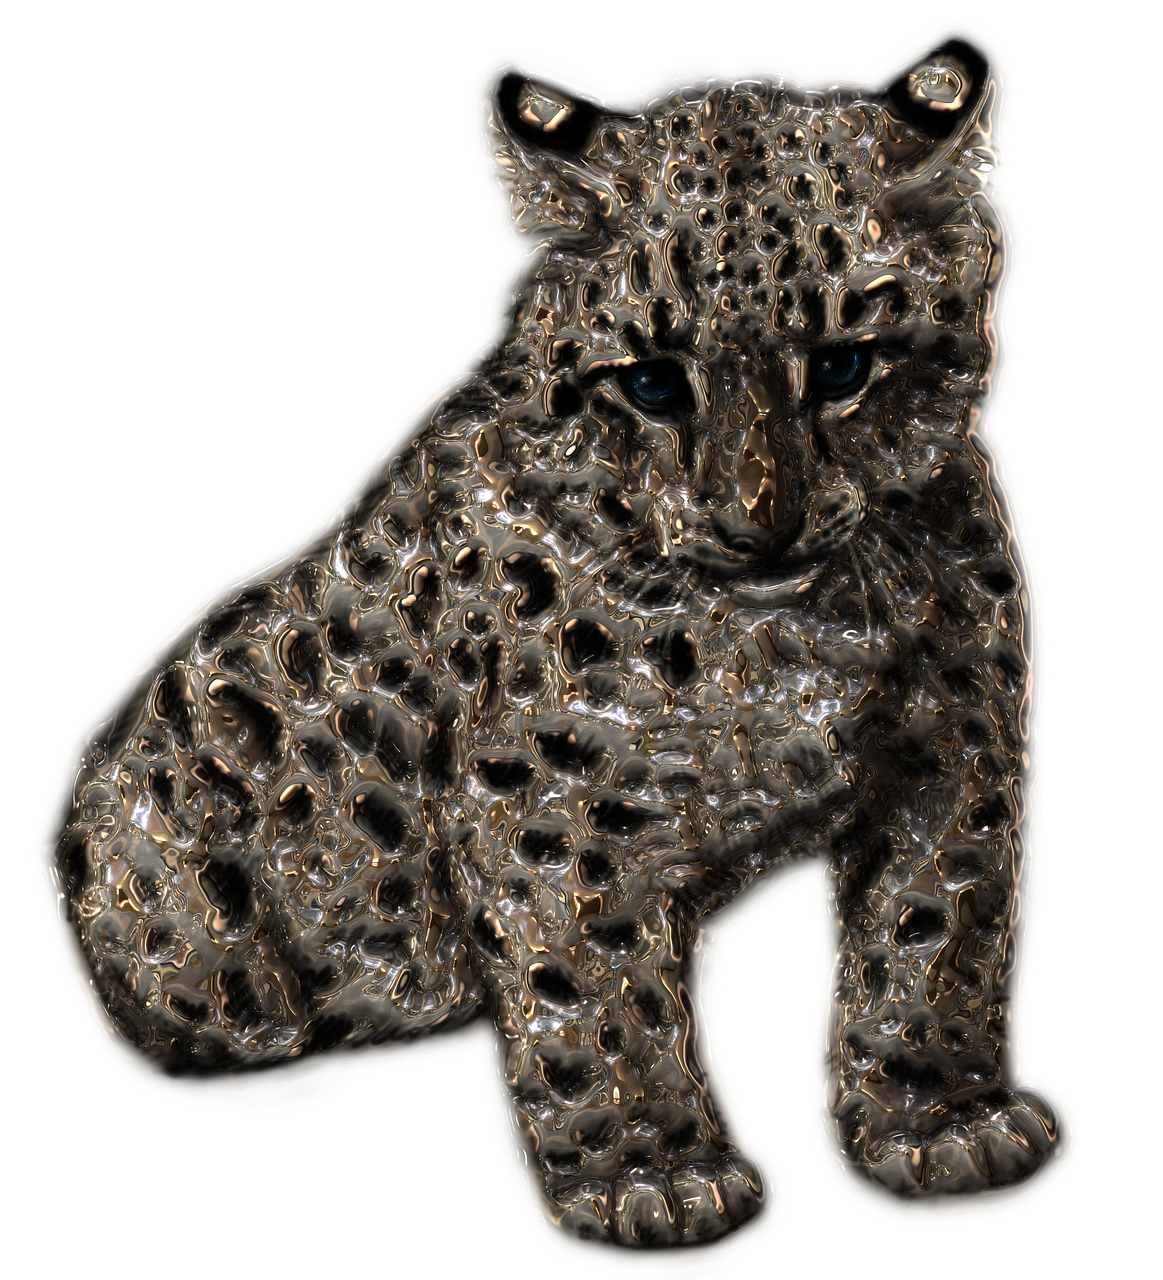 snow leopard metallizer art free photo